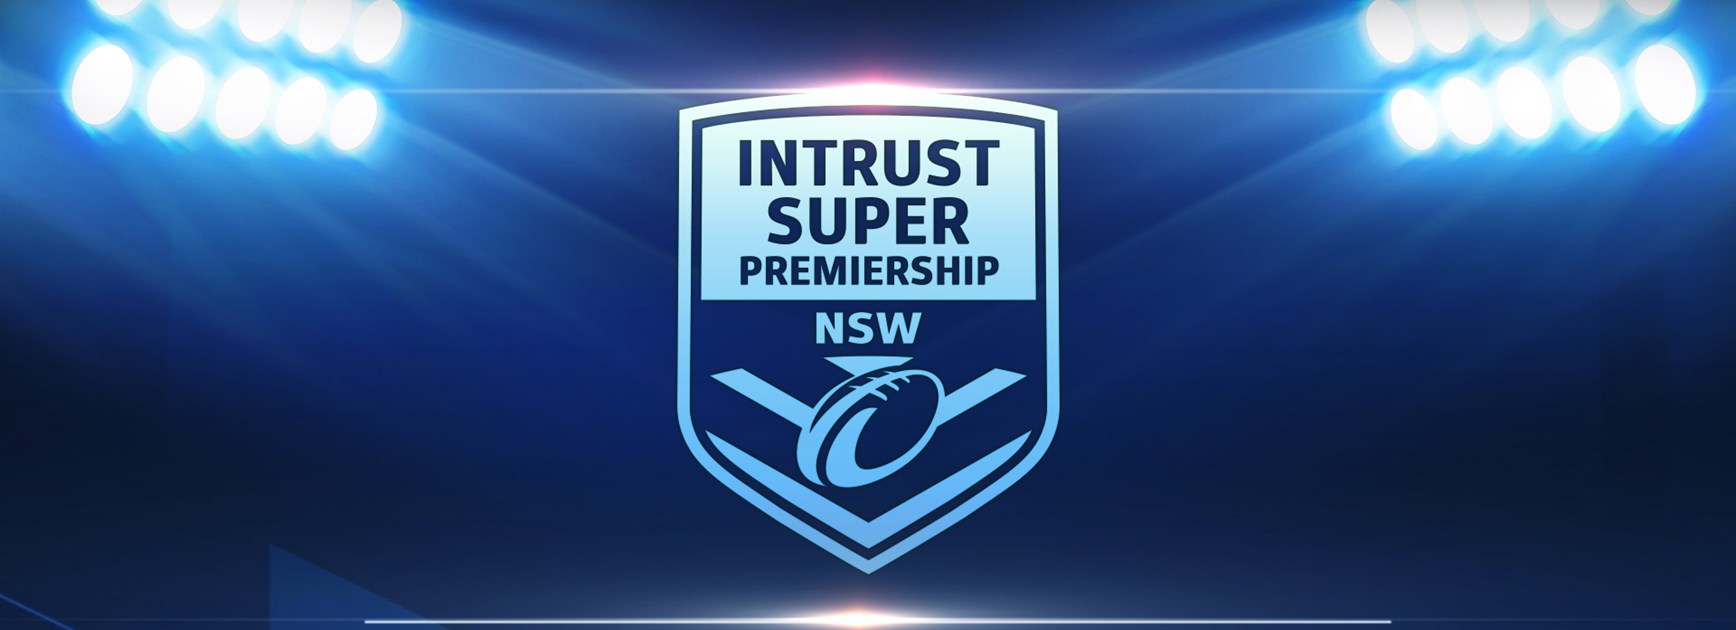 2018 Intrust Super Premiership NSW Team Of The Year